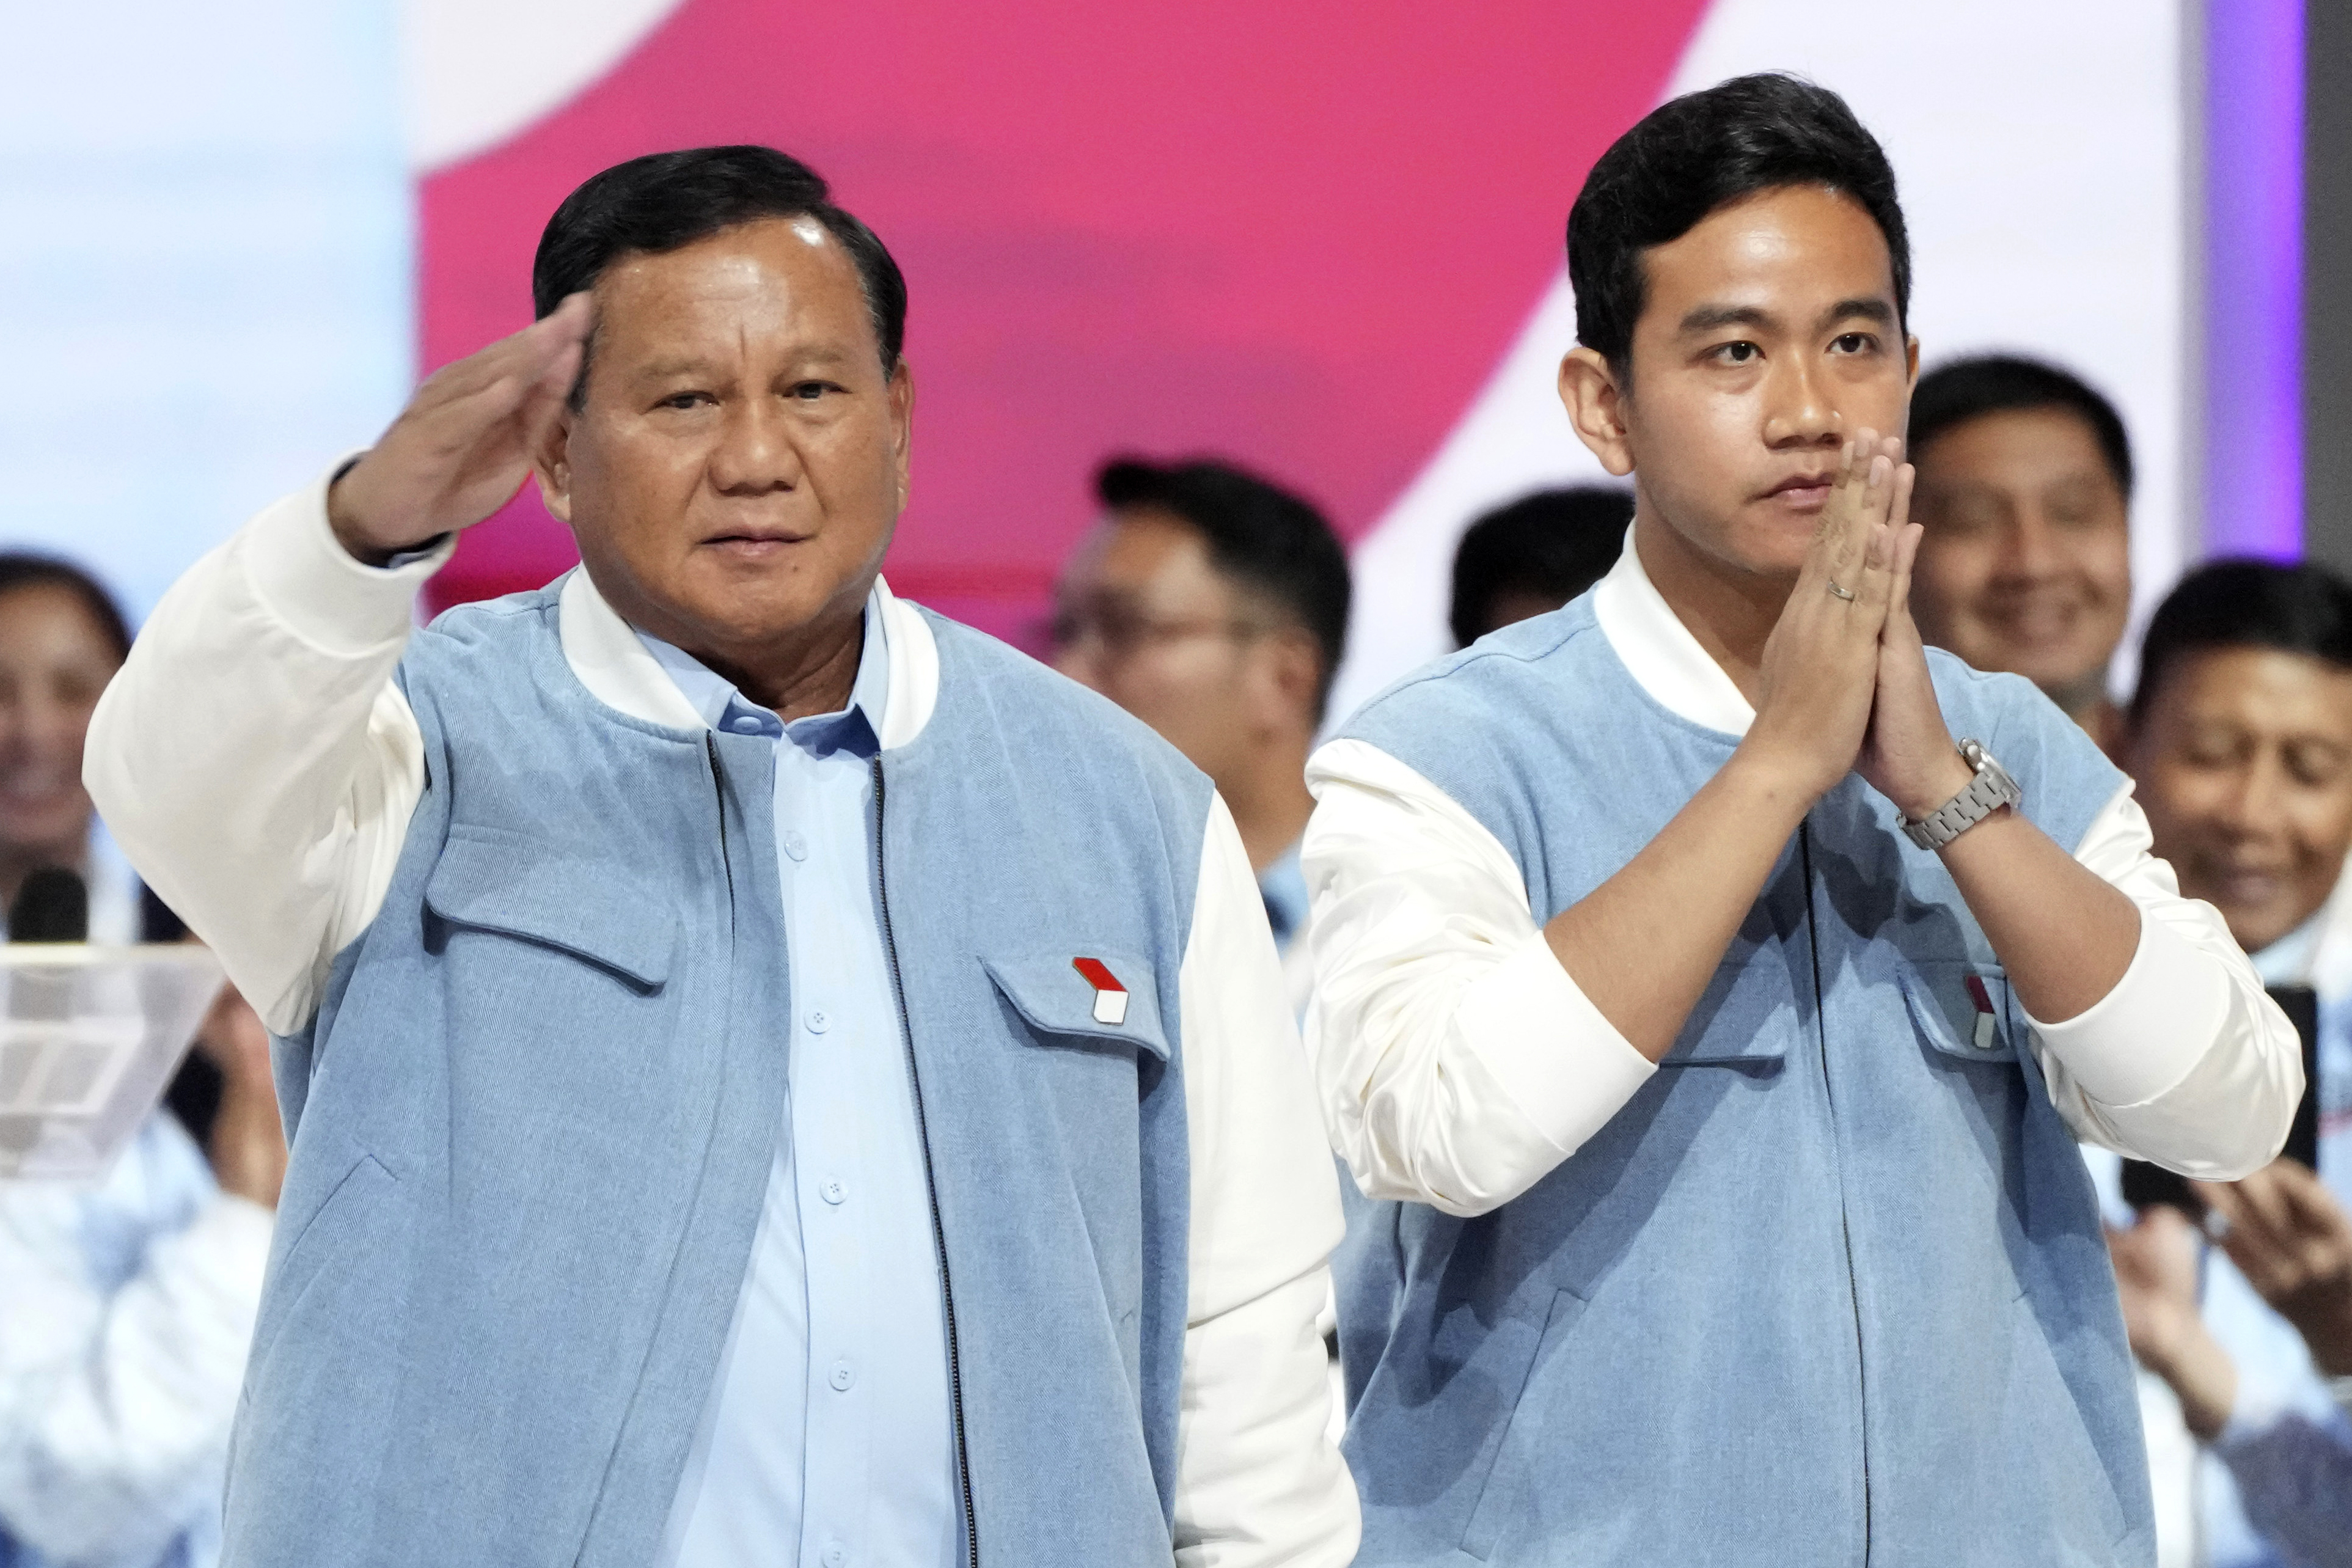 tiktok-bestefar med blodig fortid ligger best an foran valget i indonesia